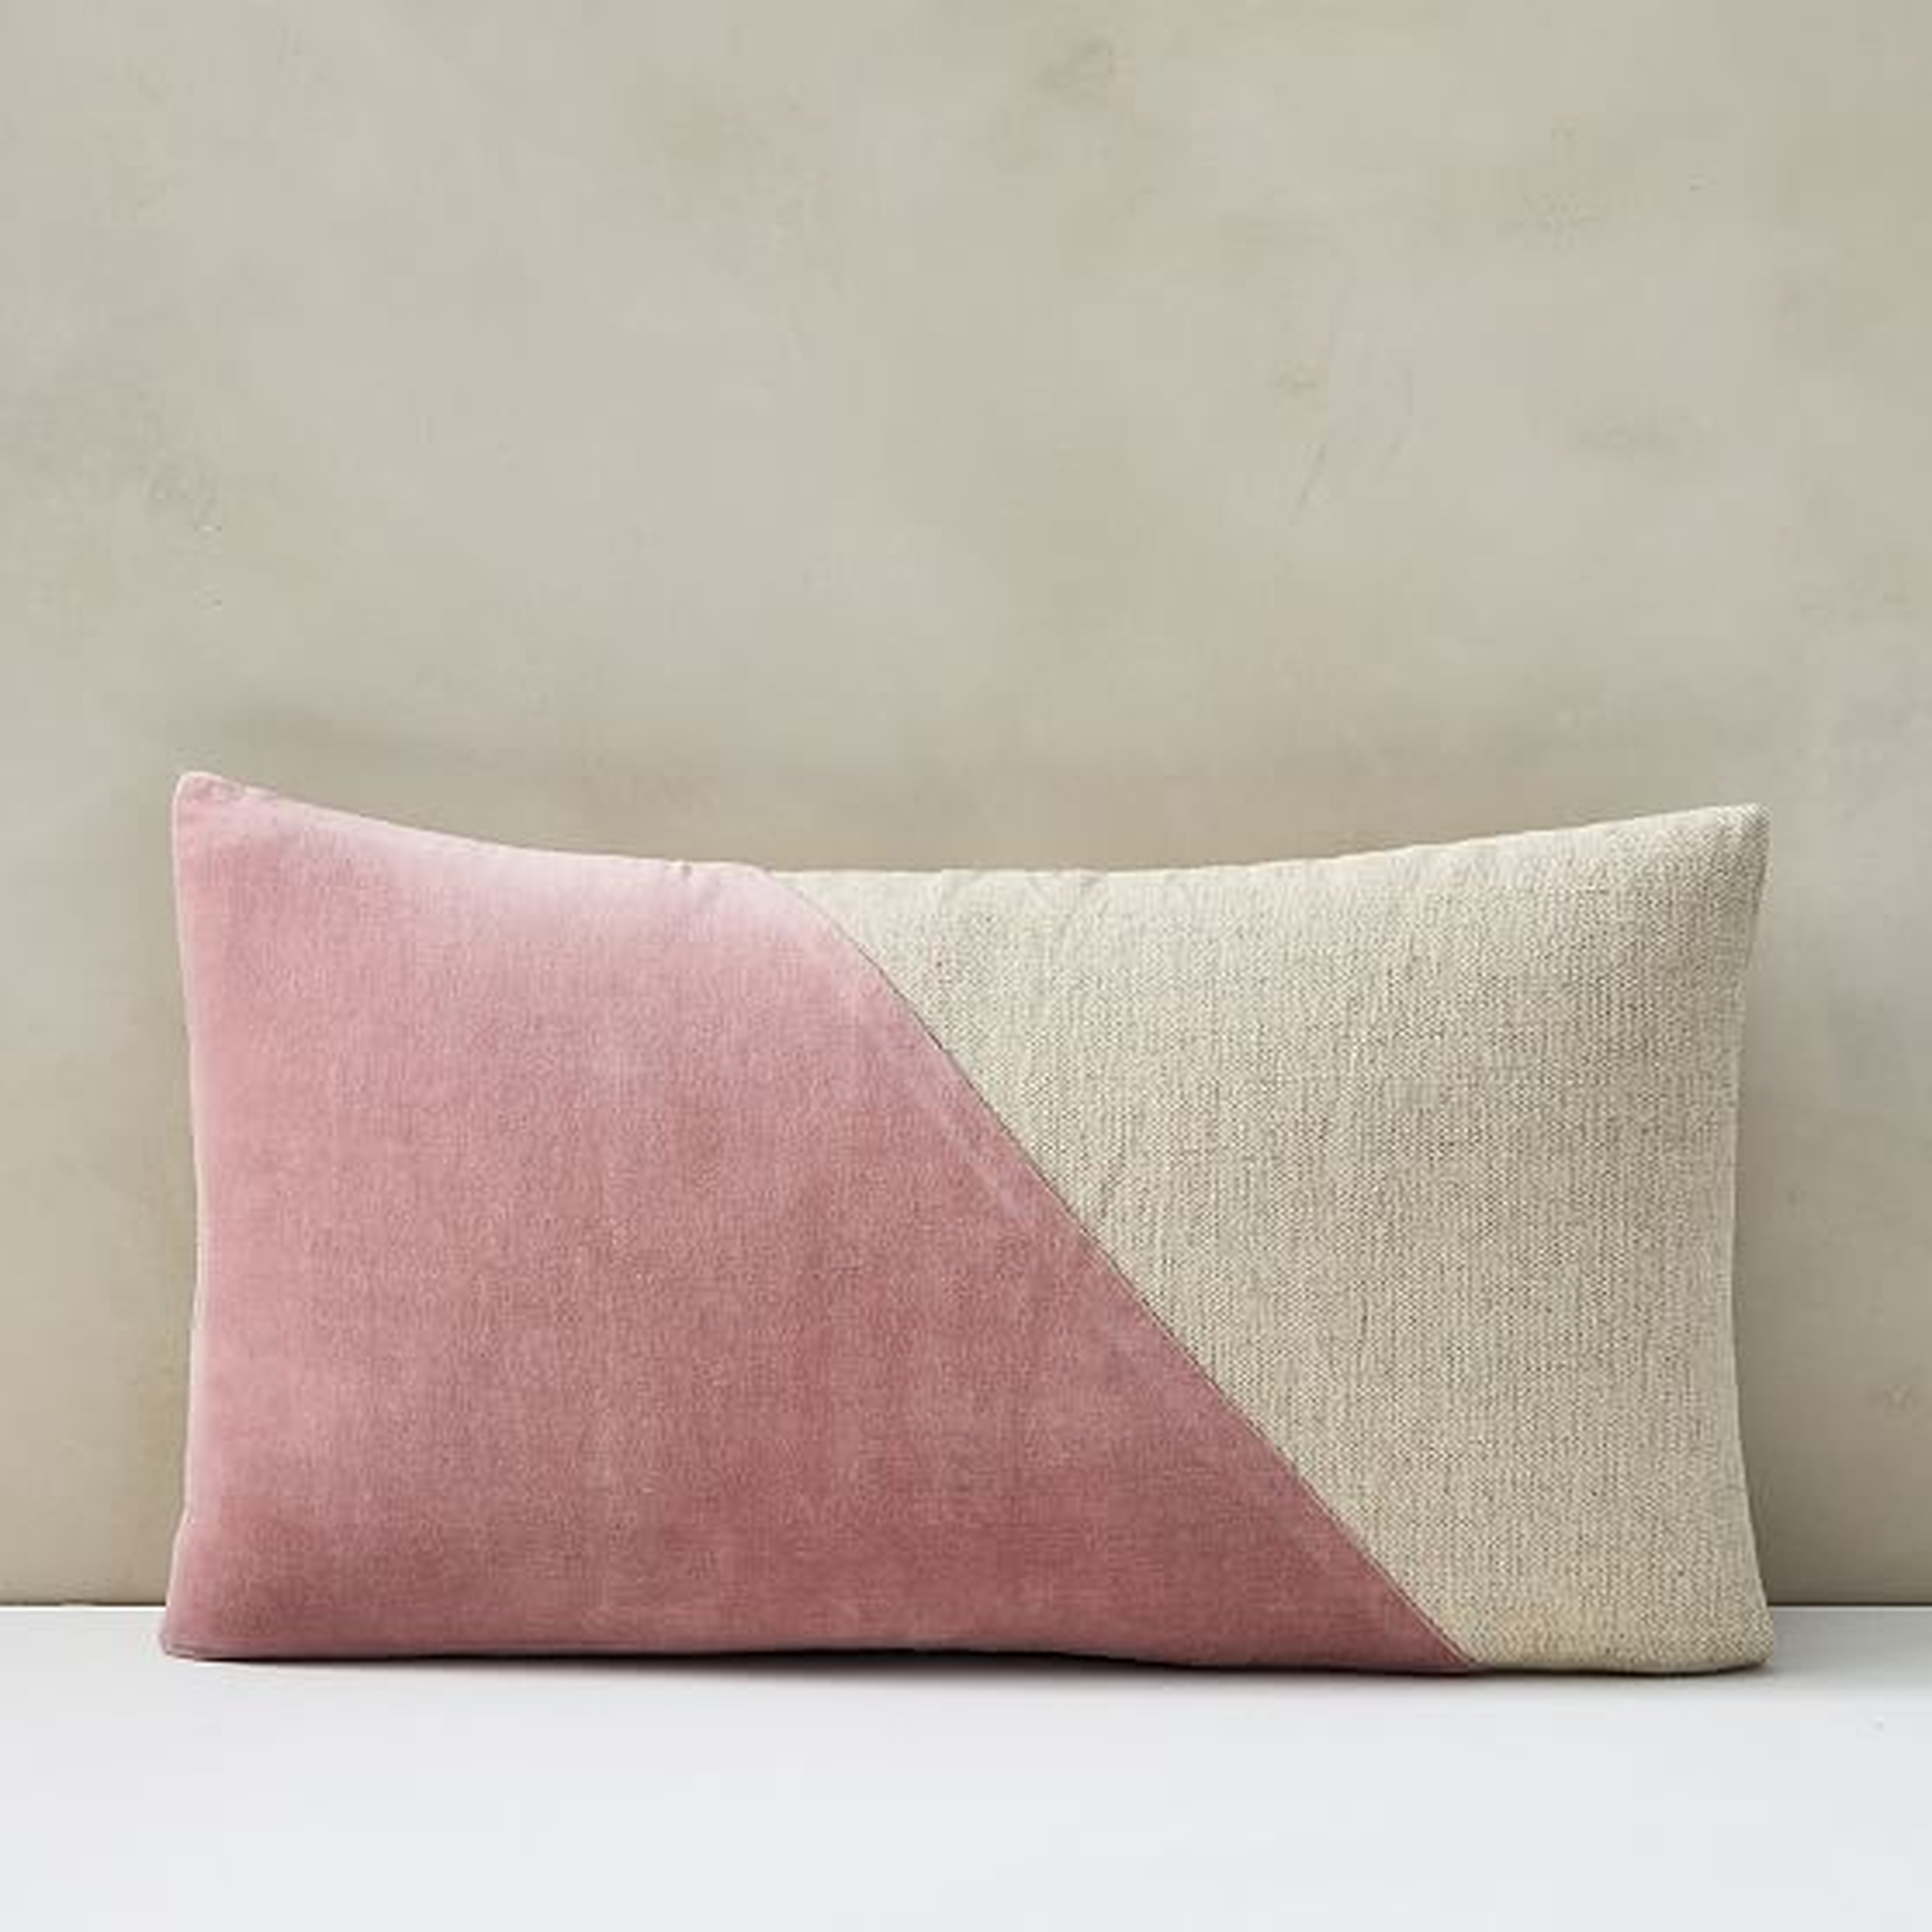 Cotton Linen + Velvet Lumbar Pillow Cover with Down Alternative Insert, Pink Stone, 12"x21" - West Elm